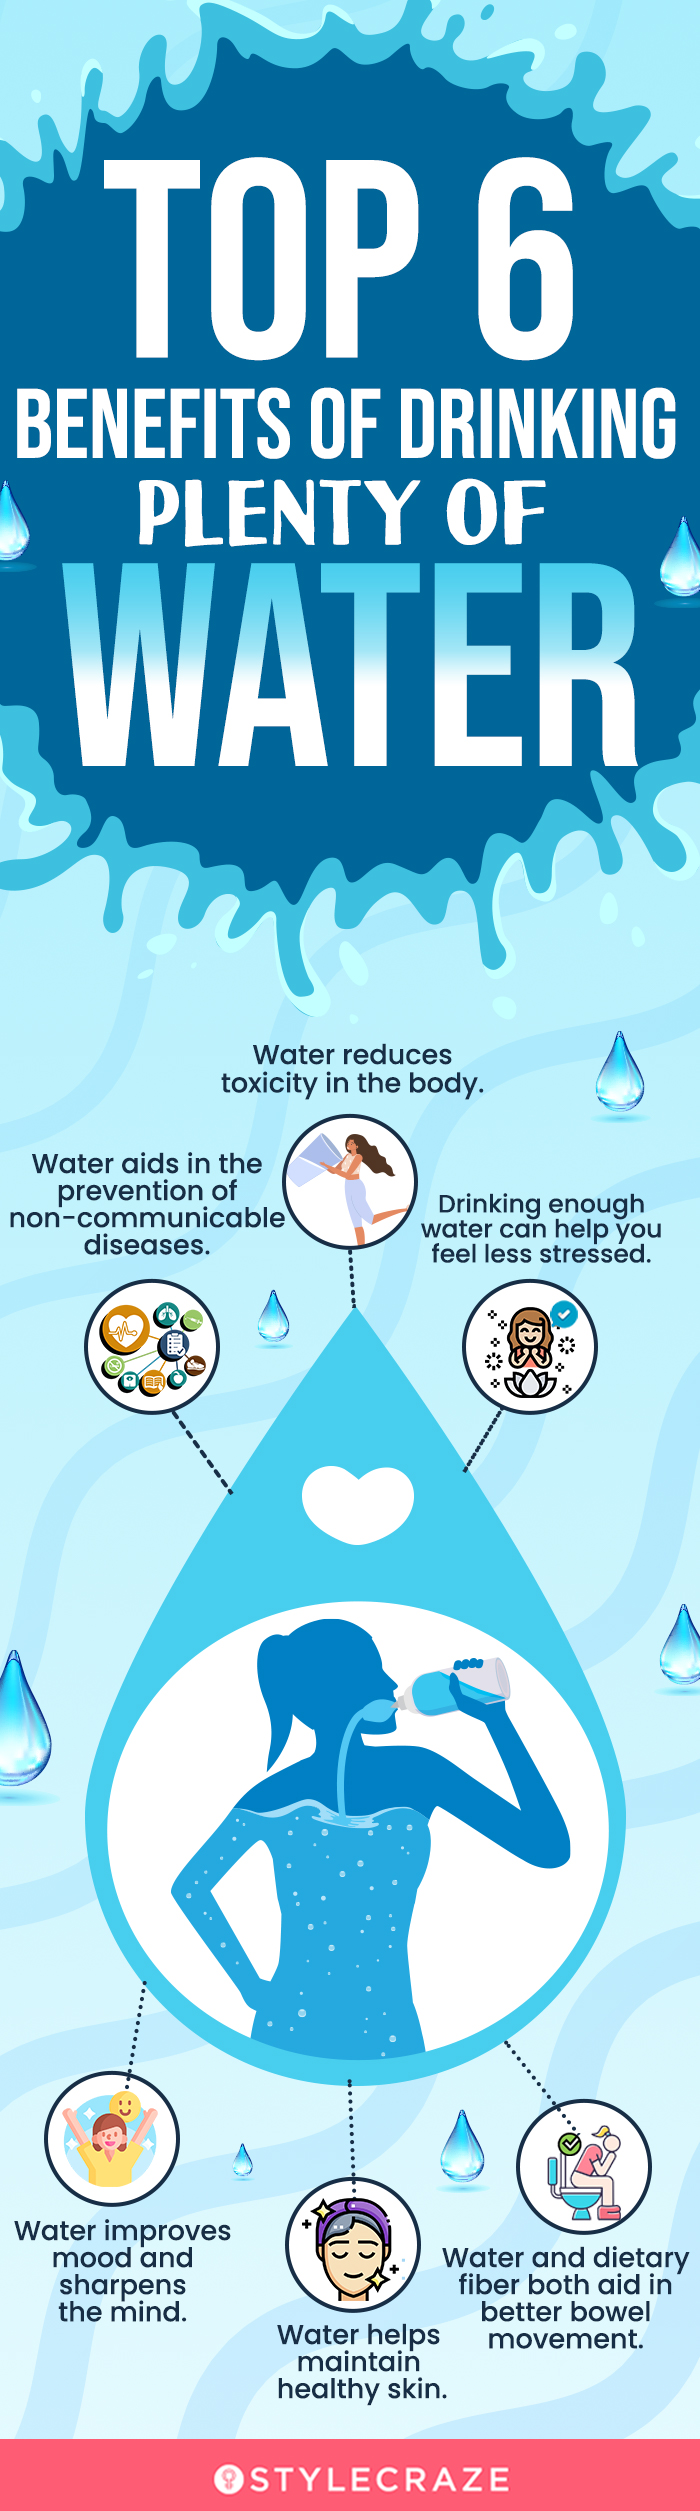 top 6 benefits of drinking plenty of water (infographic)